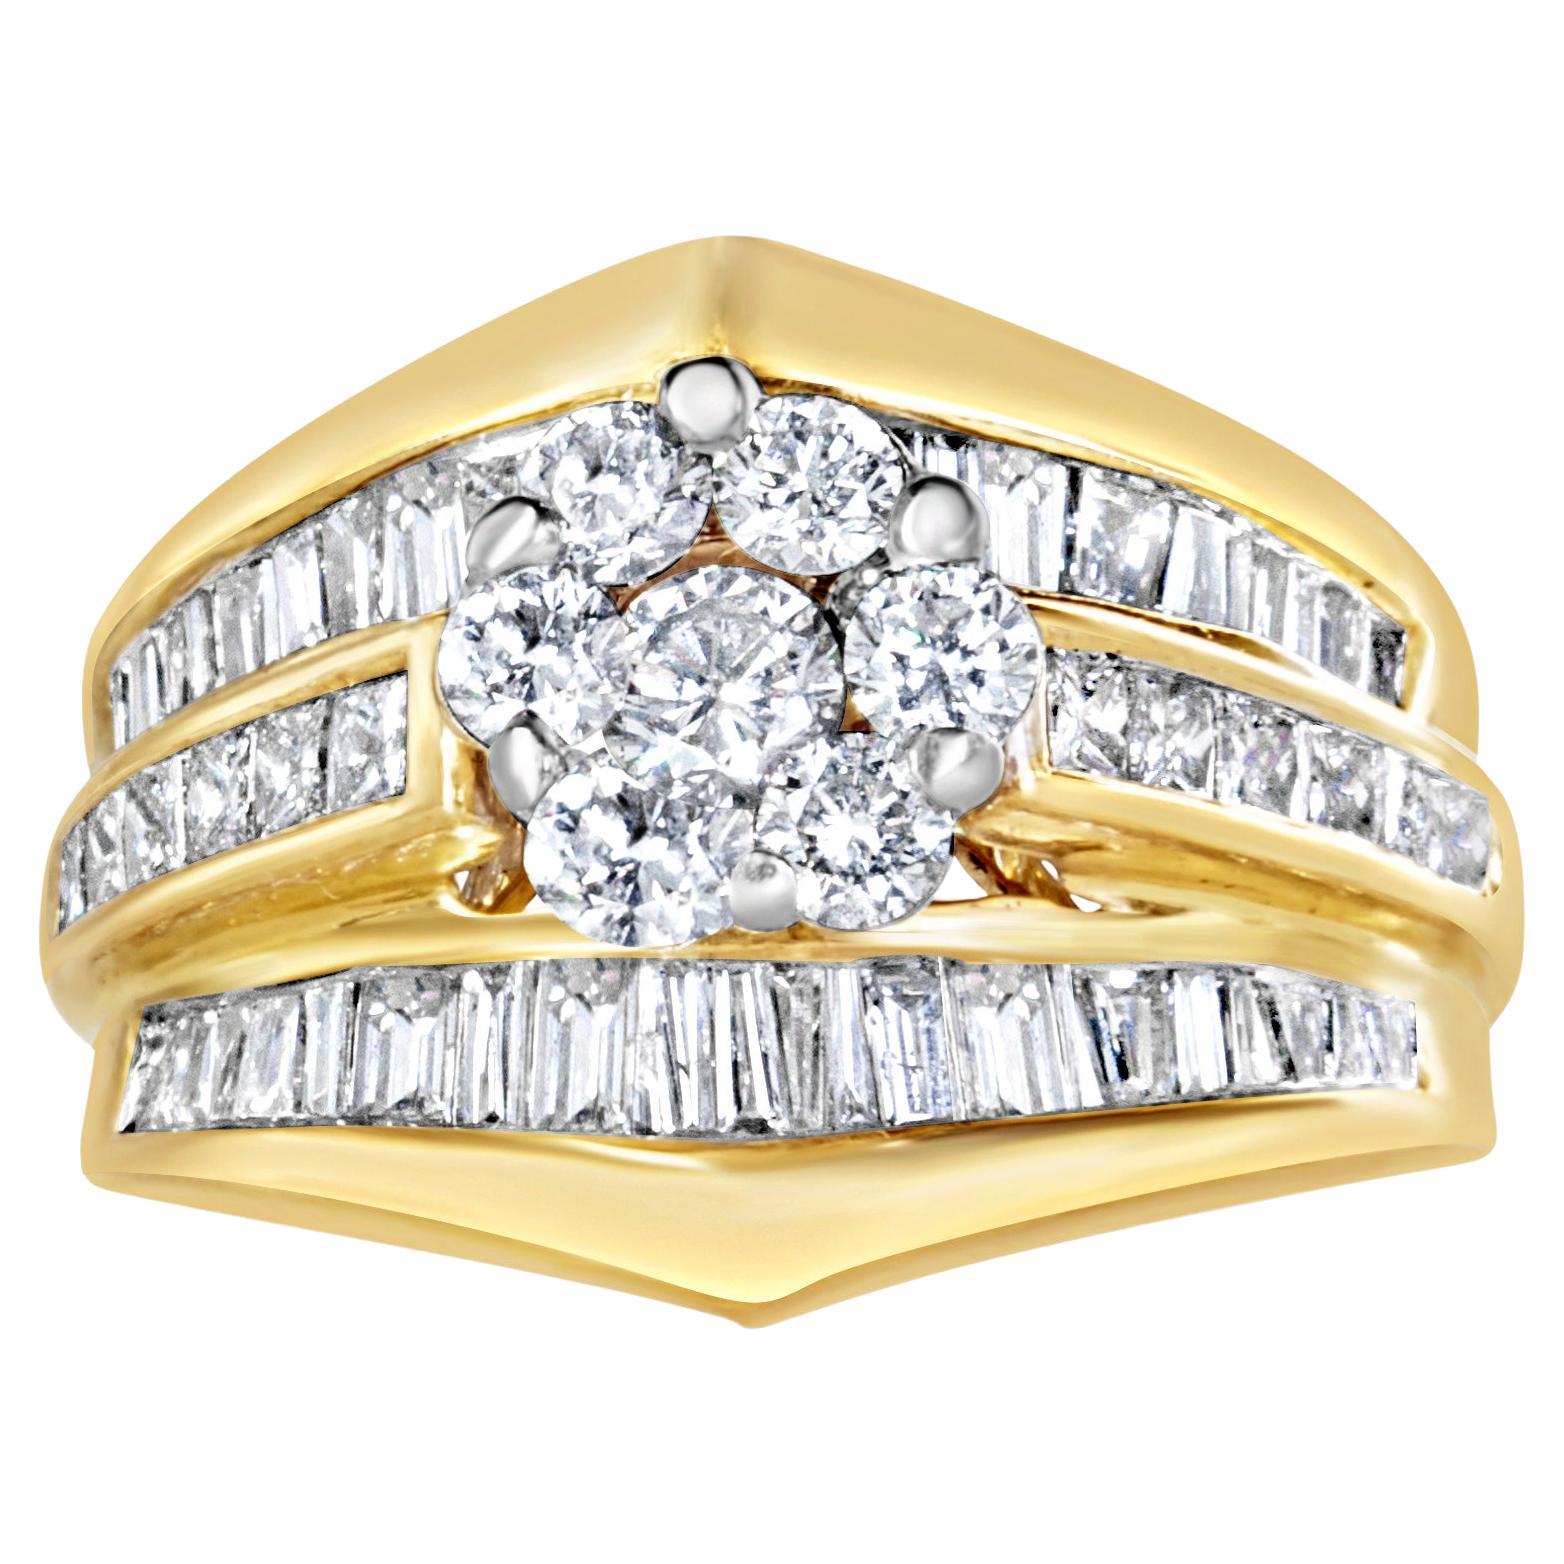 14k Yellow Gold 2 1/3 Carat Diamond Engagement Ring and Wedding Band Set